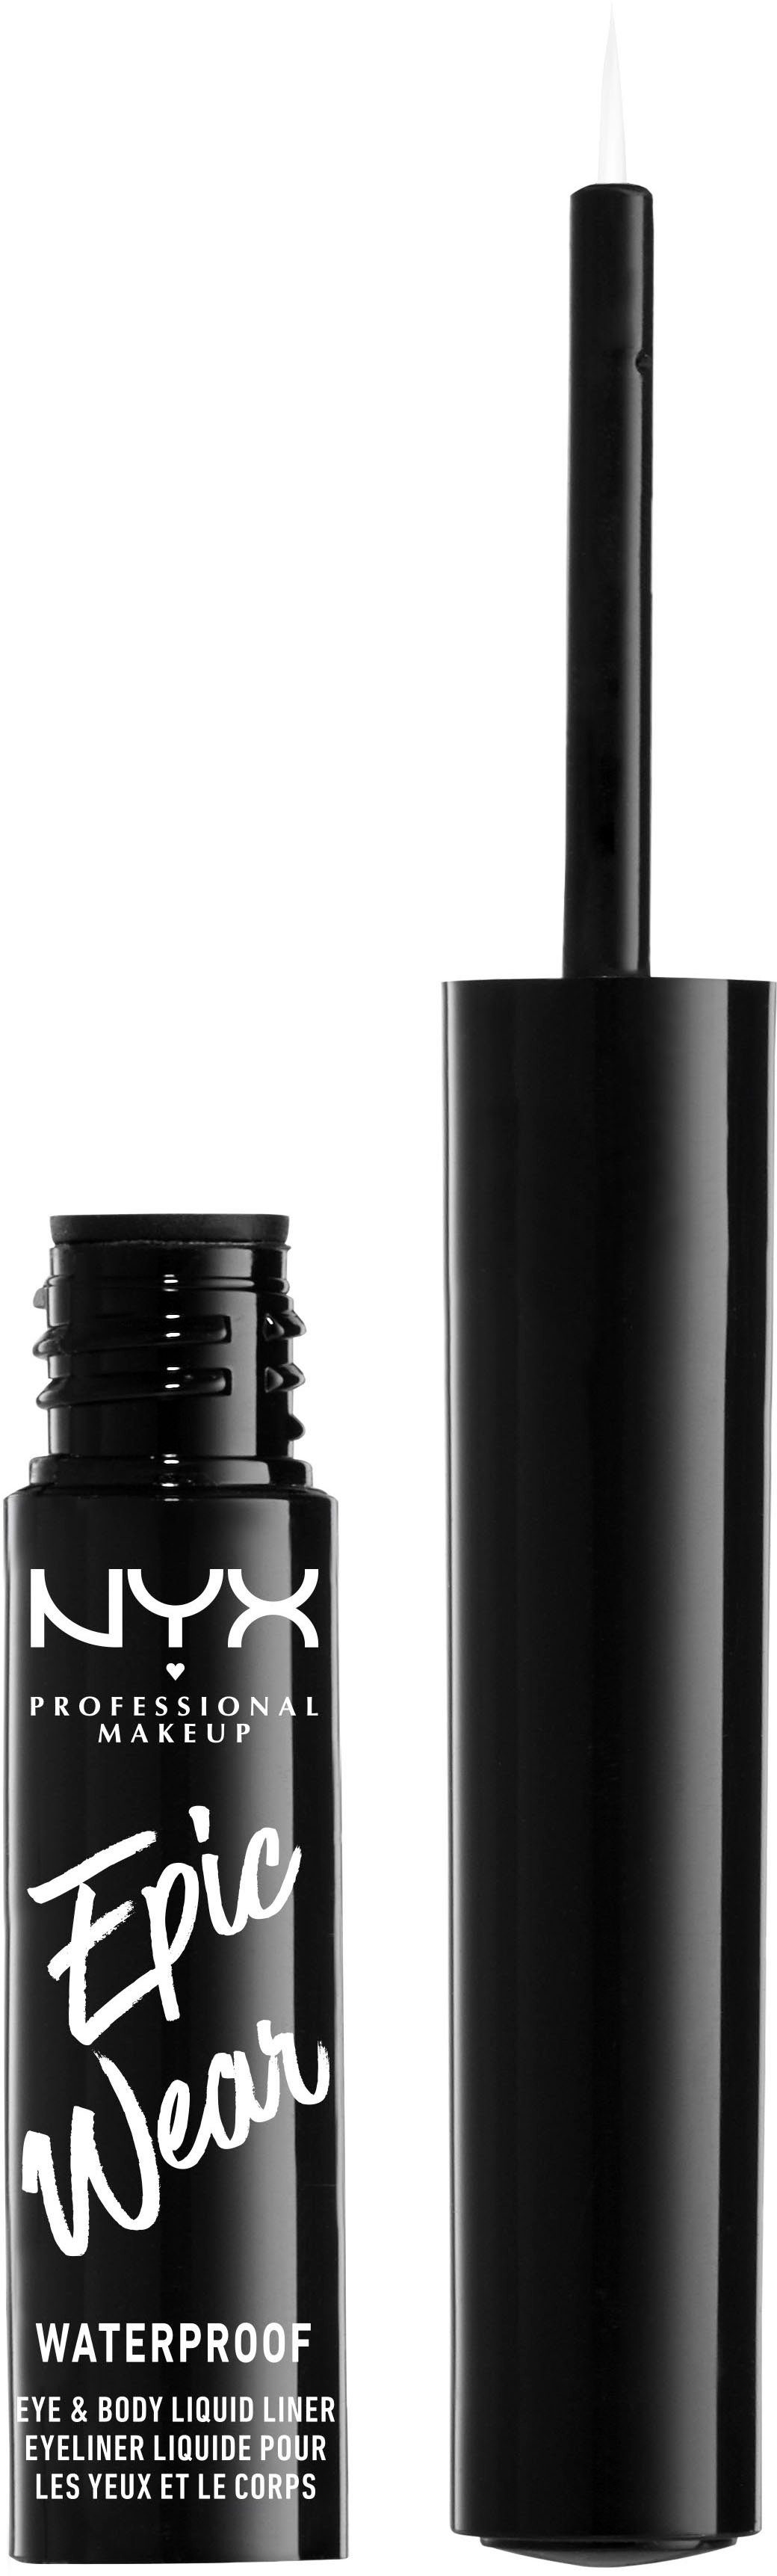 NYX Eyeliner Professional Makeup Liner, Liquid Wear White Waterproof Epic 04